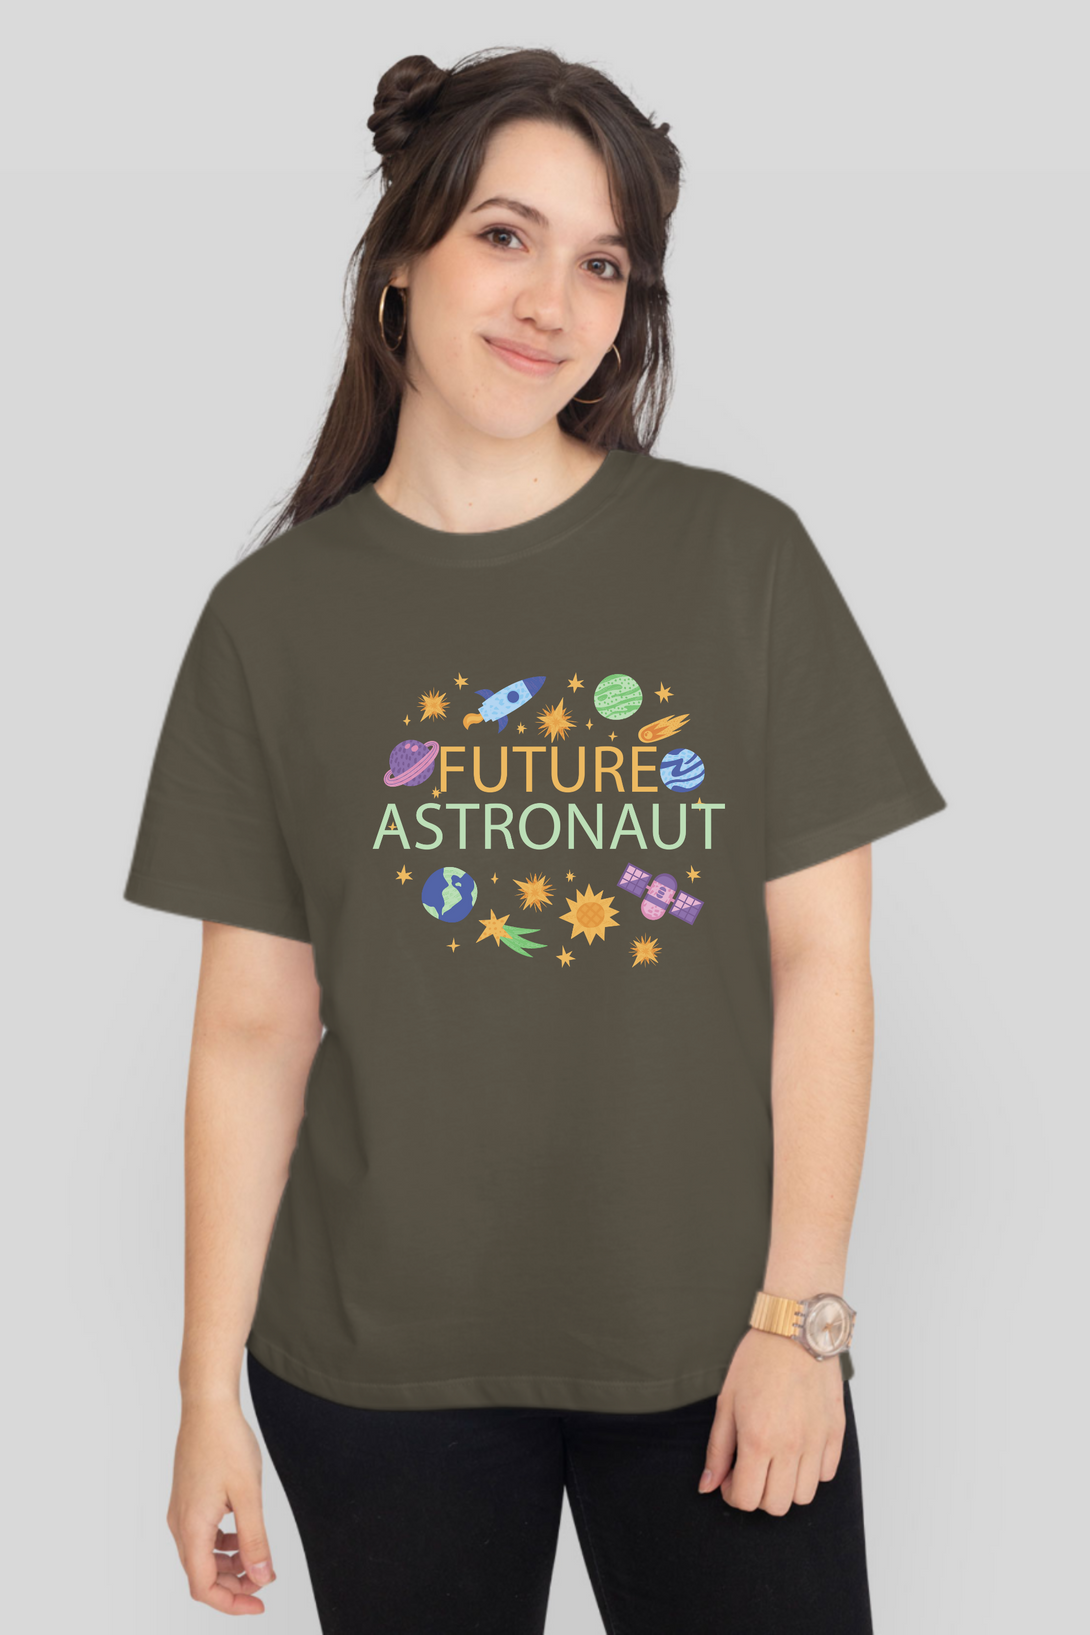 Future Astronaut Printed T-Shirt For Women - WowWaves - 8